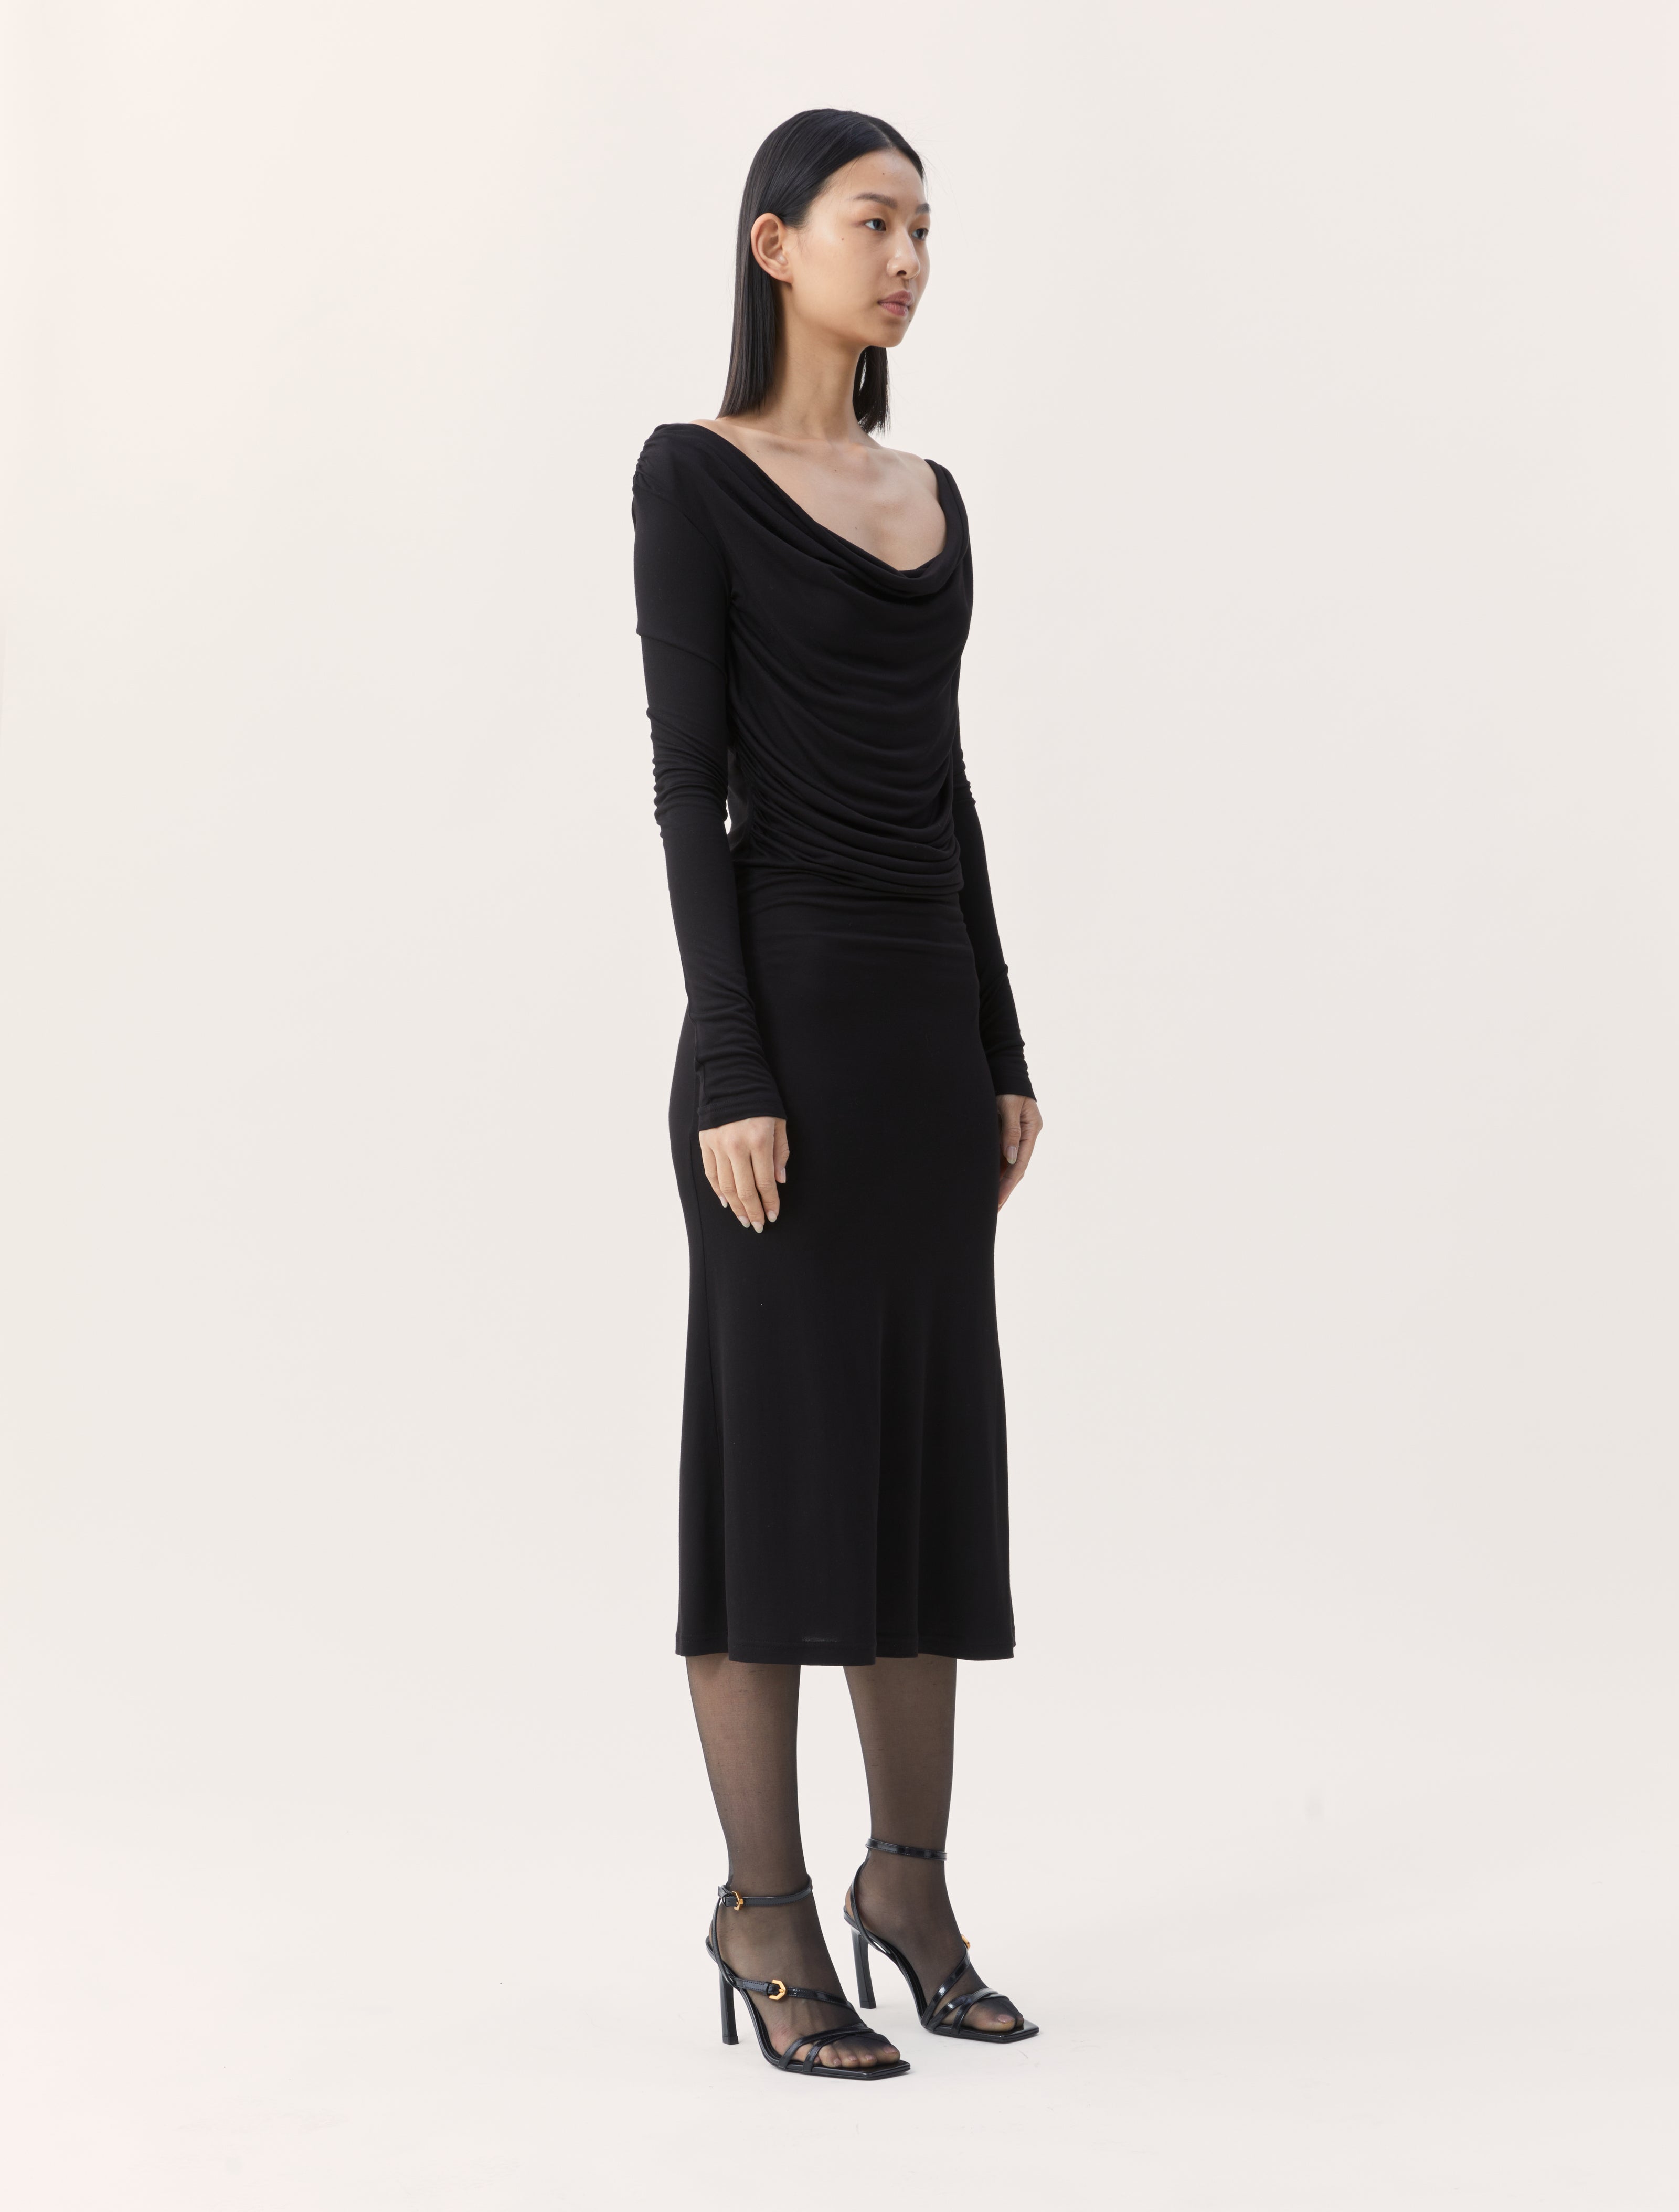 Ninety Percent Inver Dress in Black